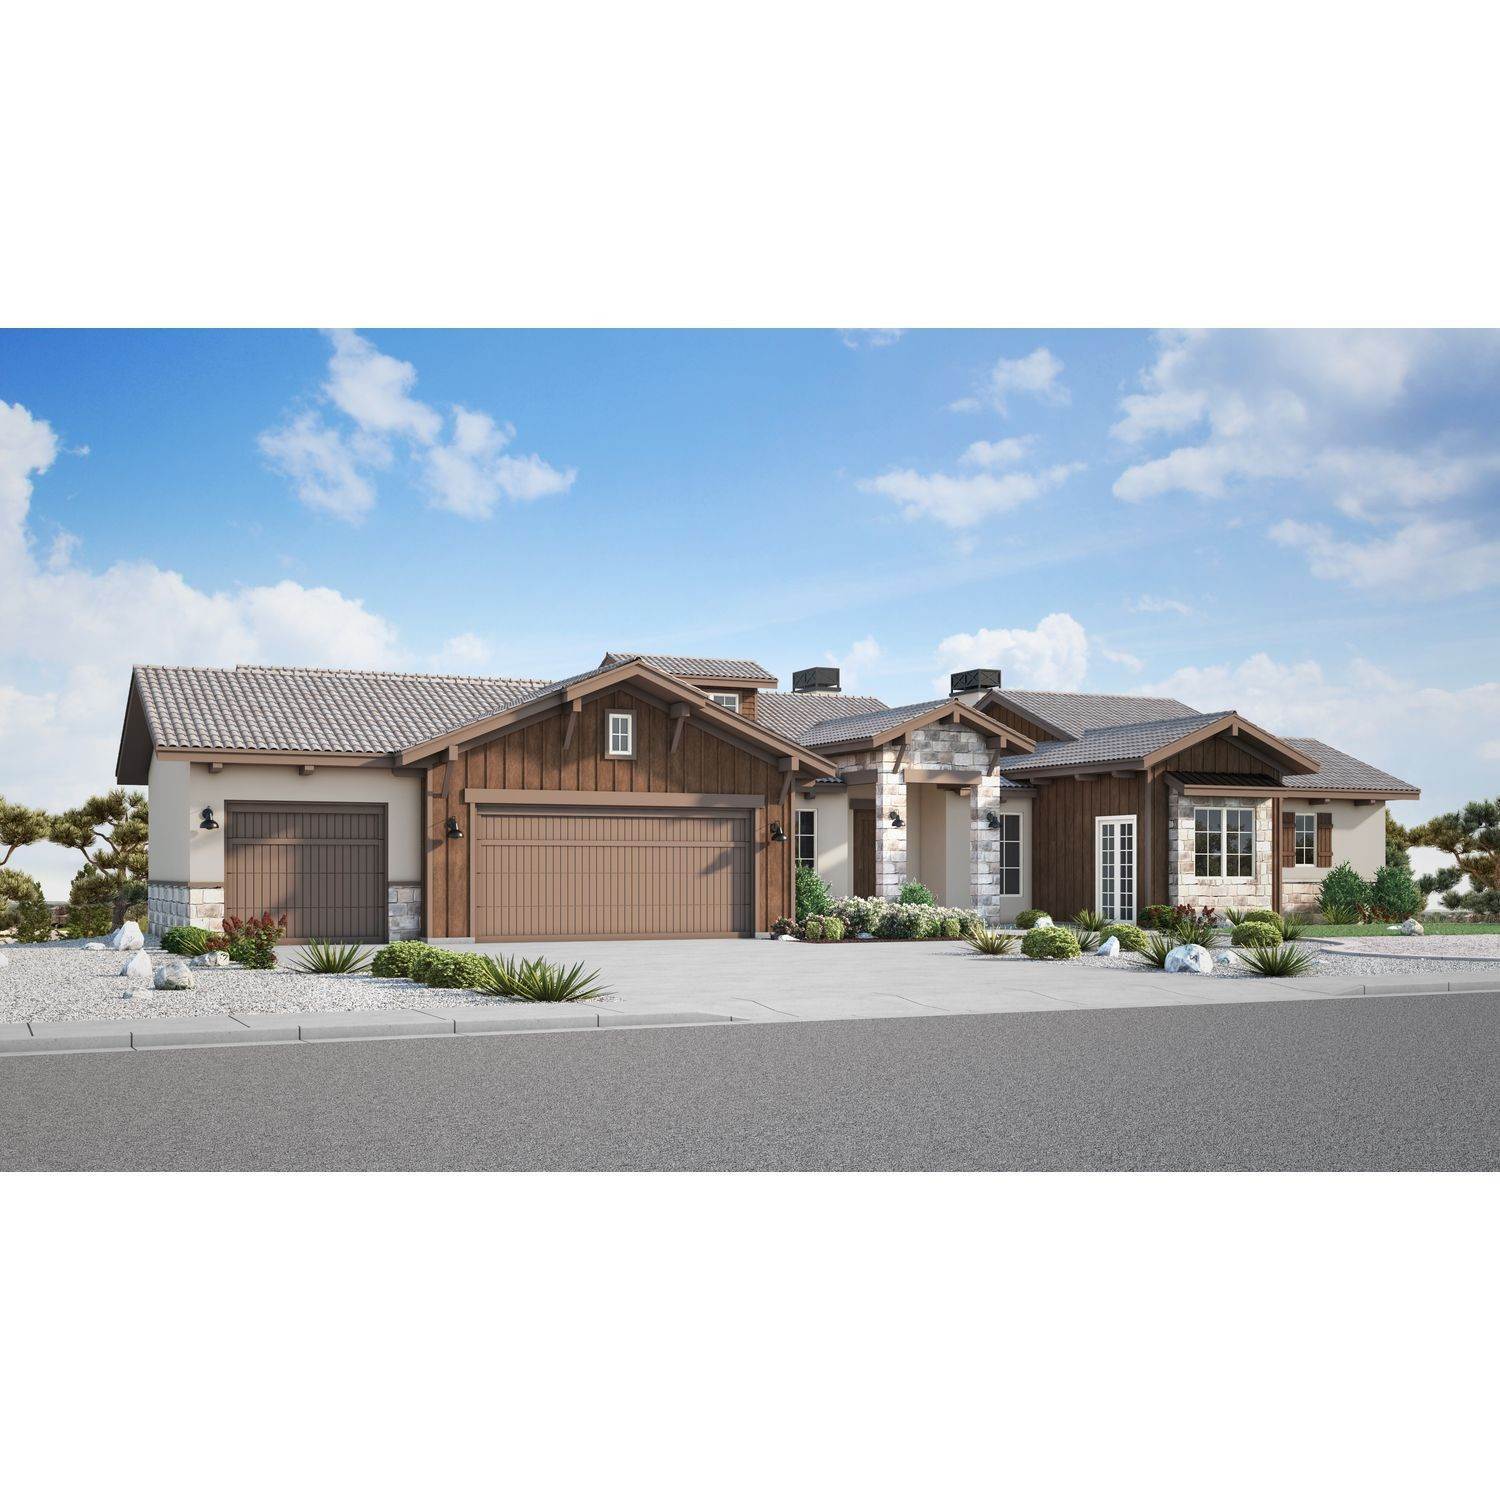 26. Galiant Homes building at 4783 Farmingdale Dr, Colorado Springs, CO 80918